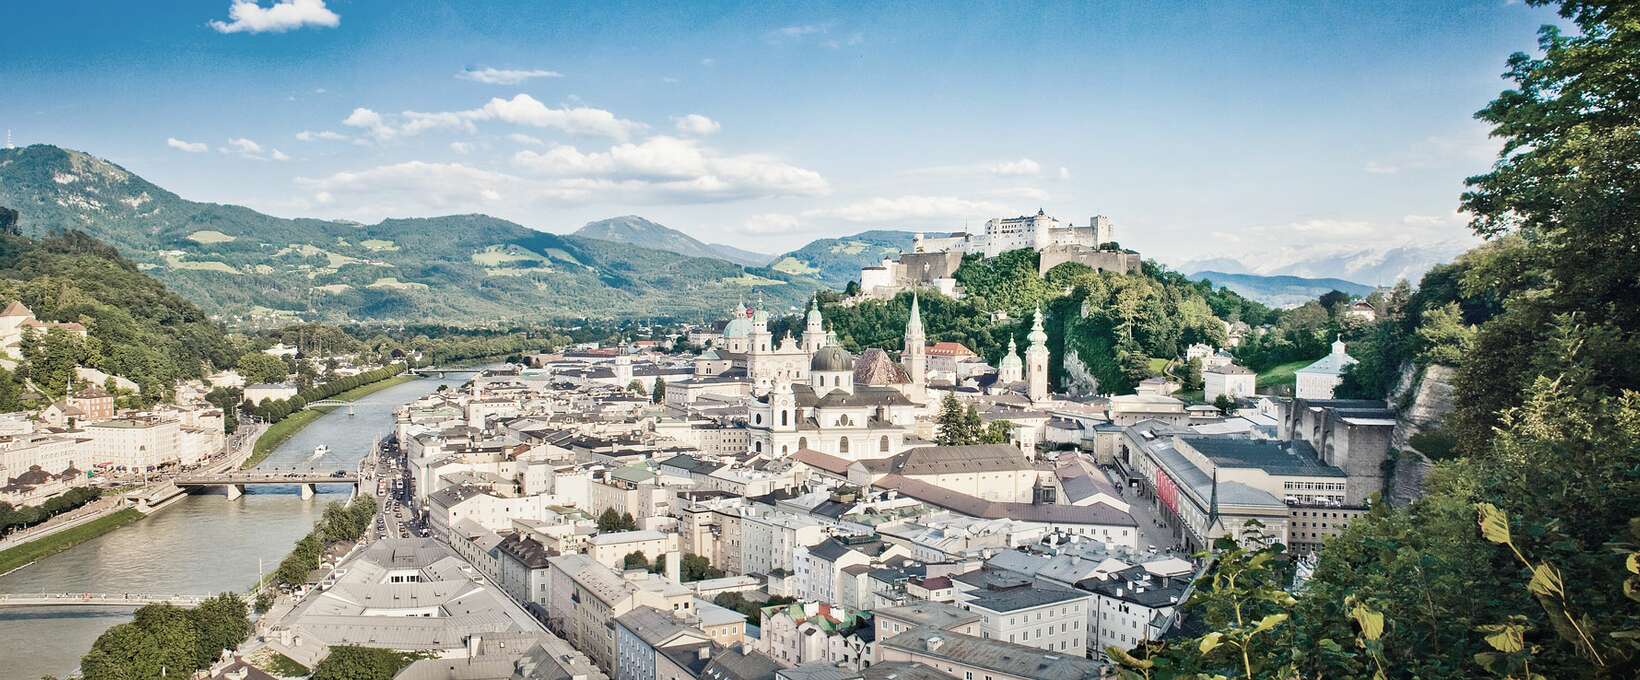 Panorama over the city | Salzburg